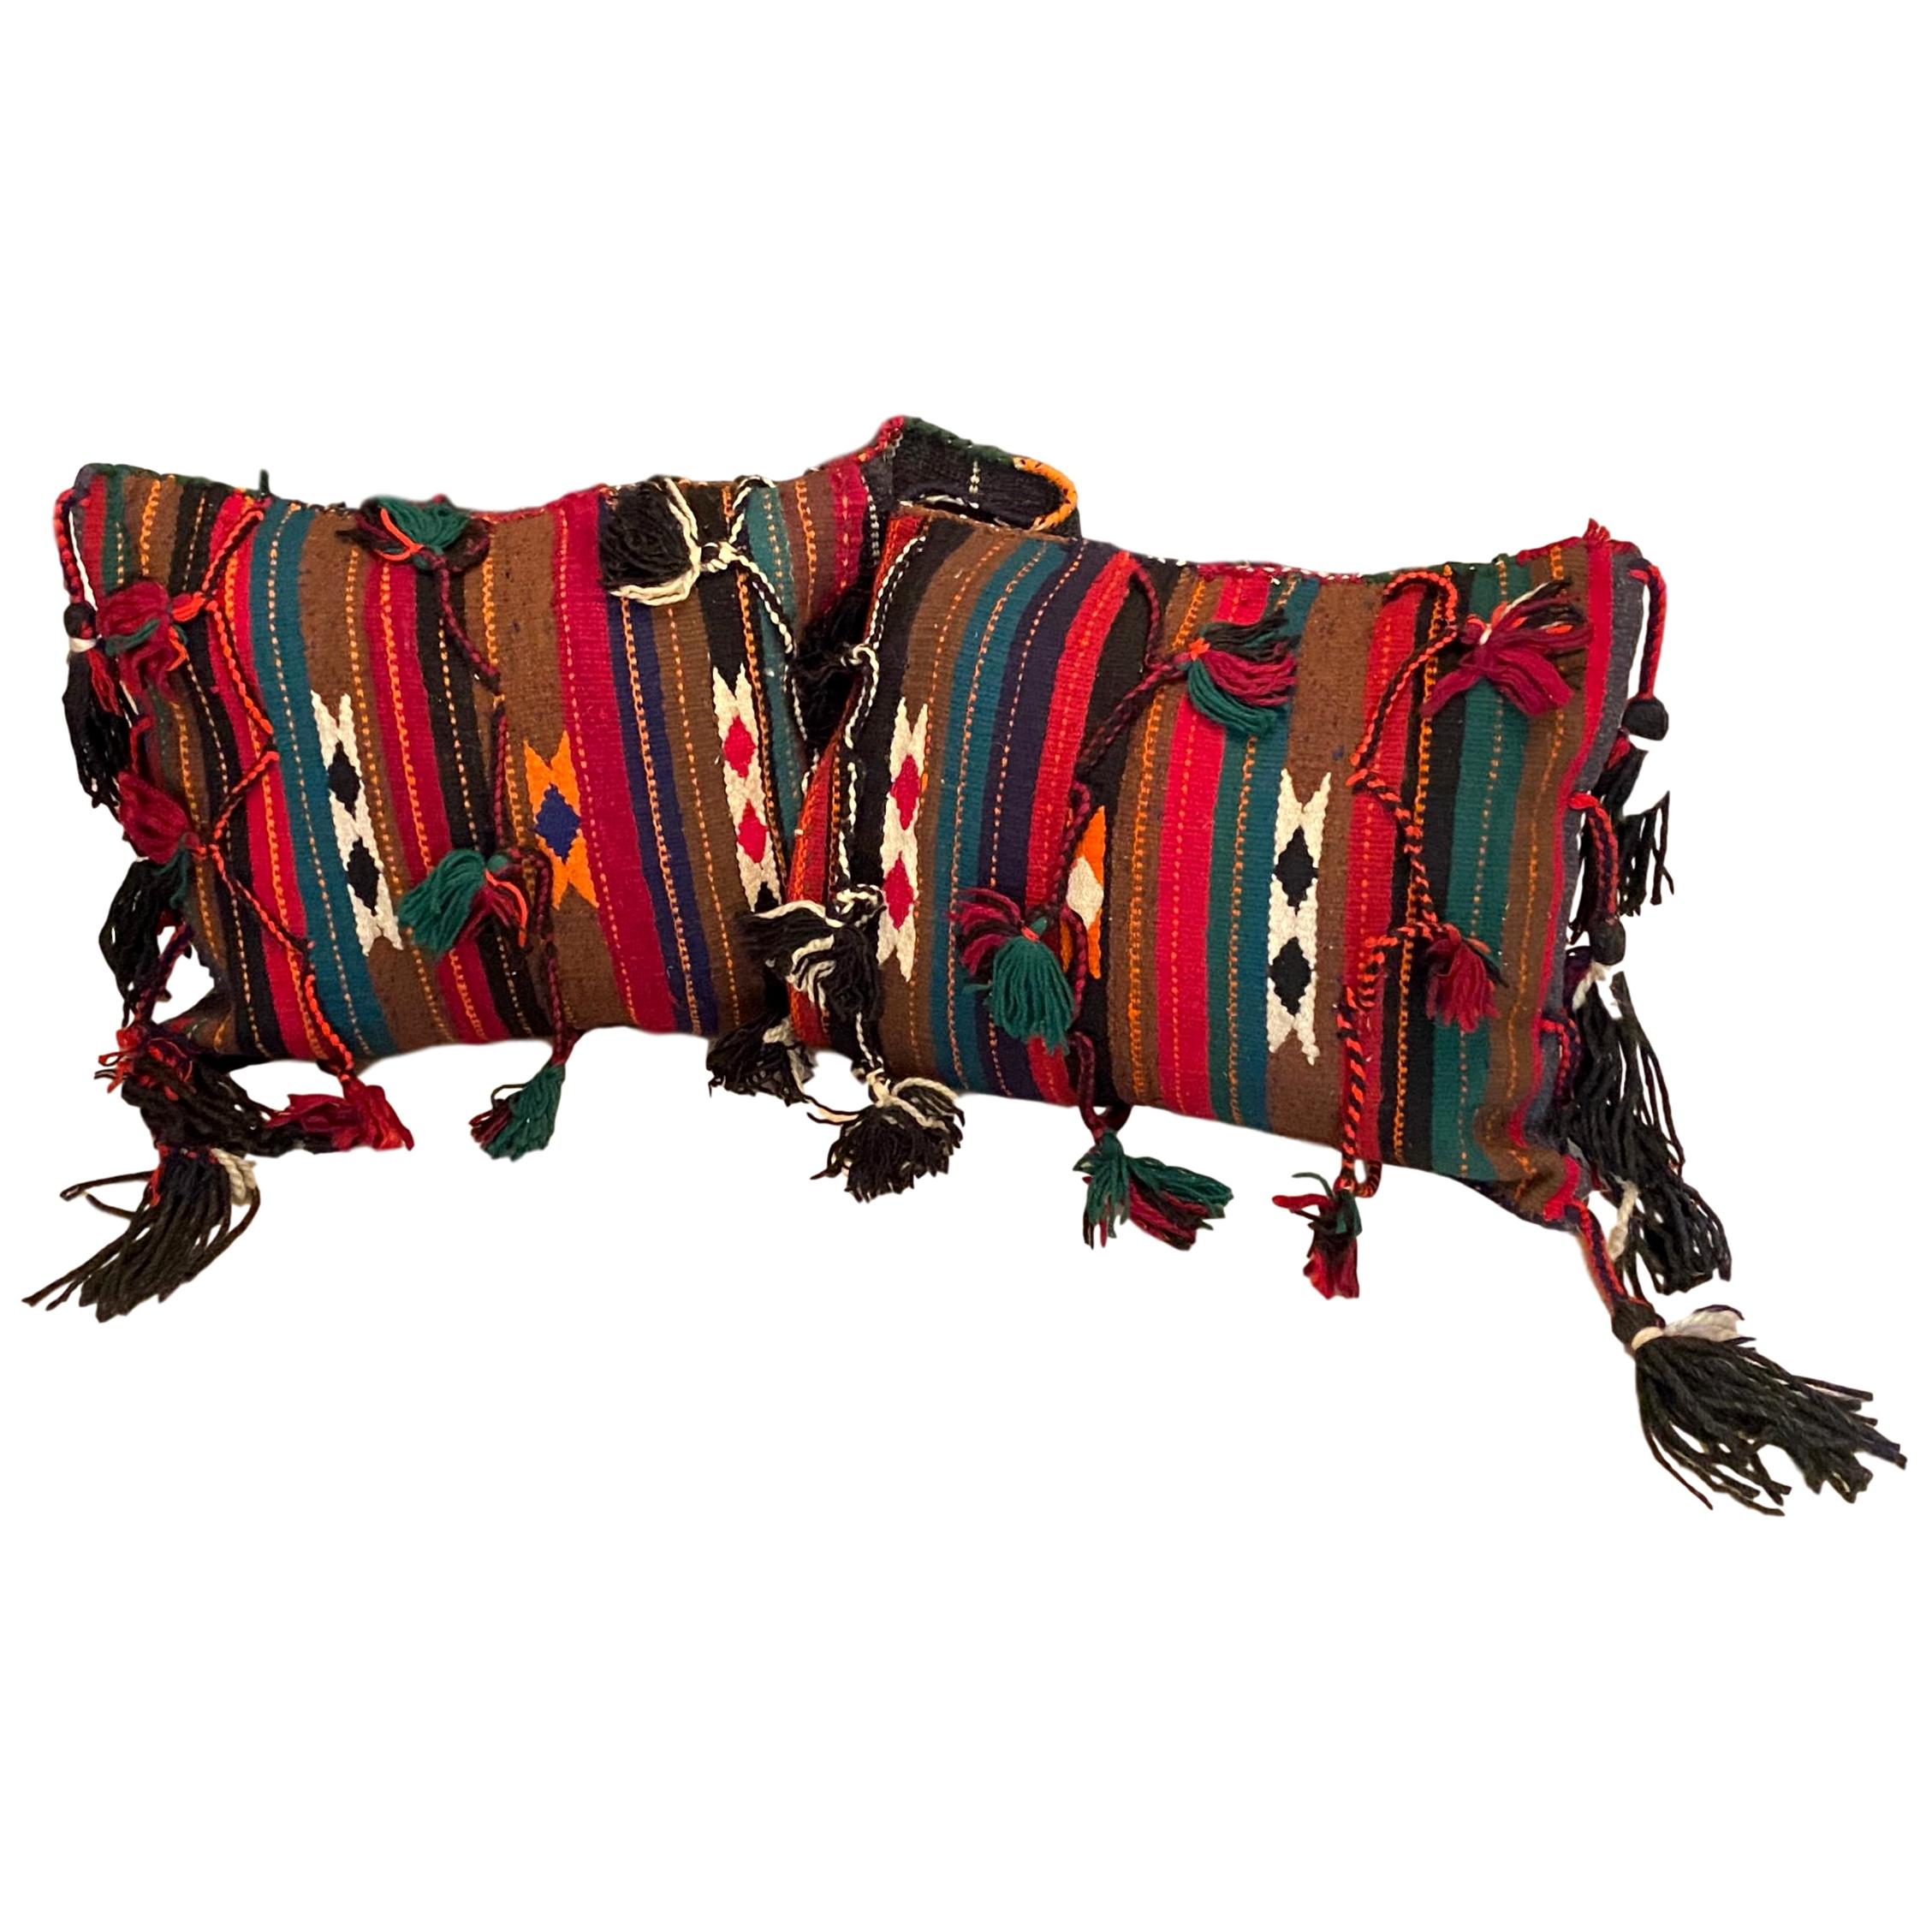 Stunning Large Gypsy Turkish Arabic Oriental Salt or Camel Bag Embroidery Pillow